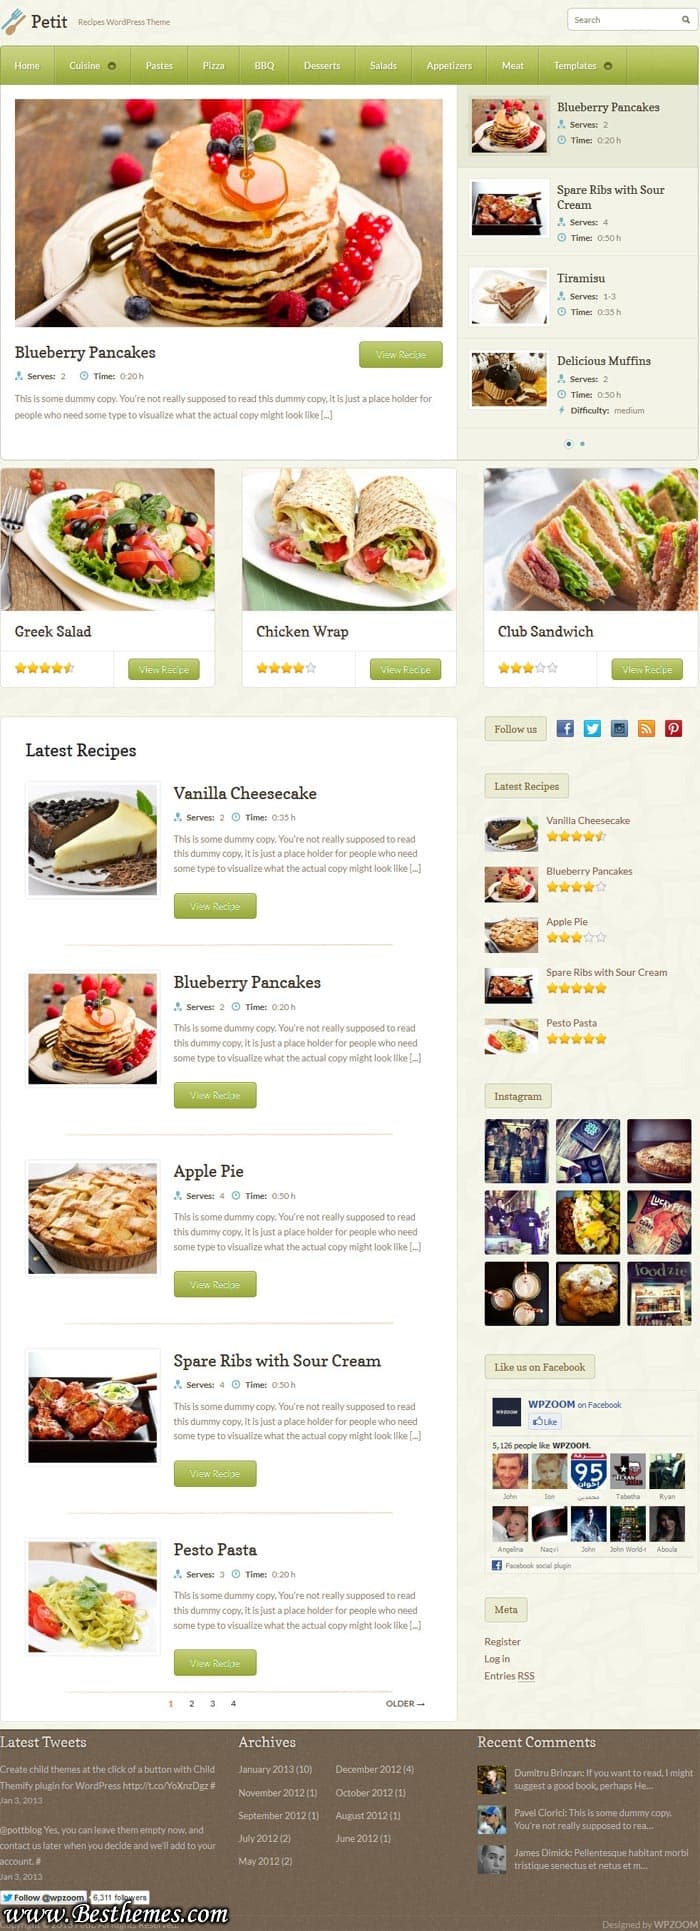 Petit WordPress Theme, Petit WordPress template, WPZoom Petit WordPress Theme, Best Food Blog WordPress Themes, Best Recipe WordPress Theme